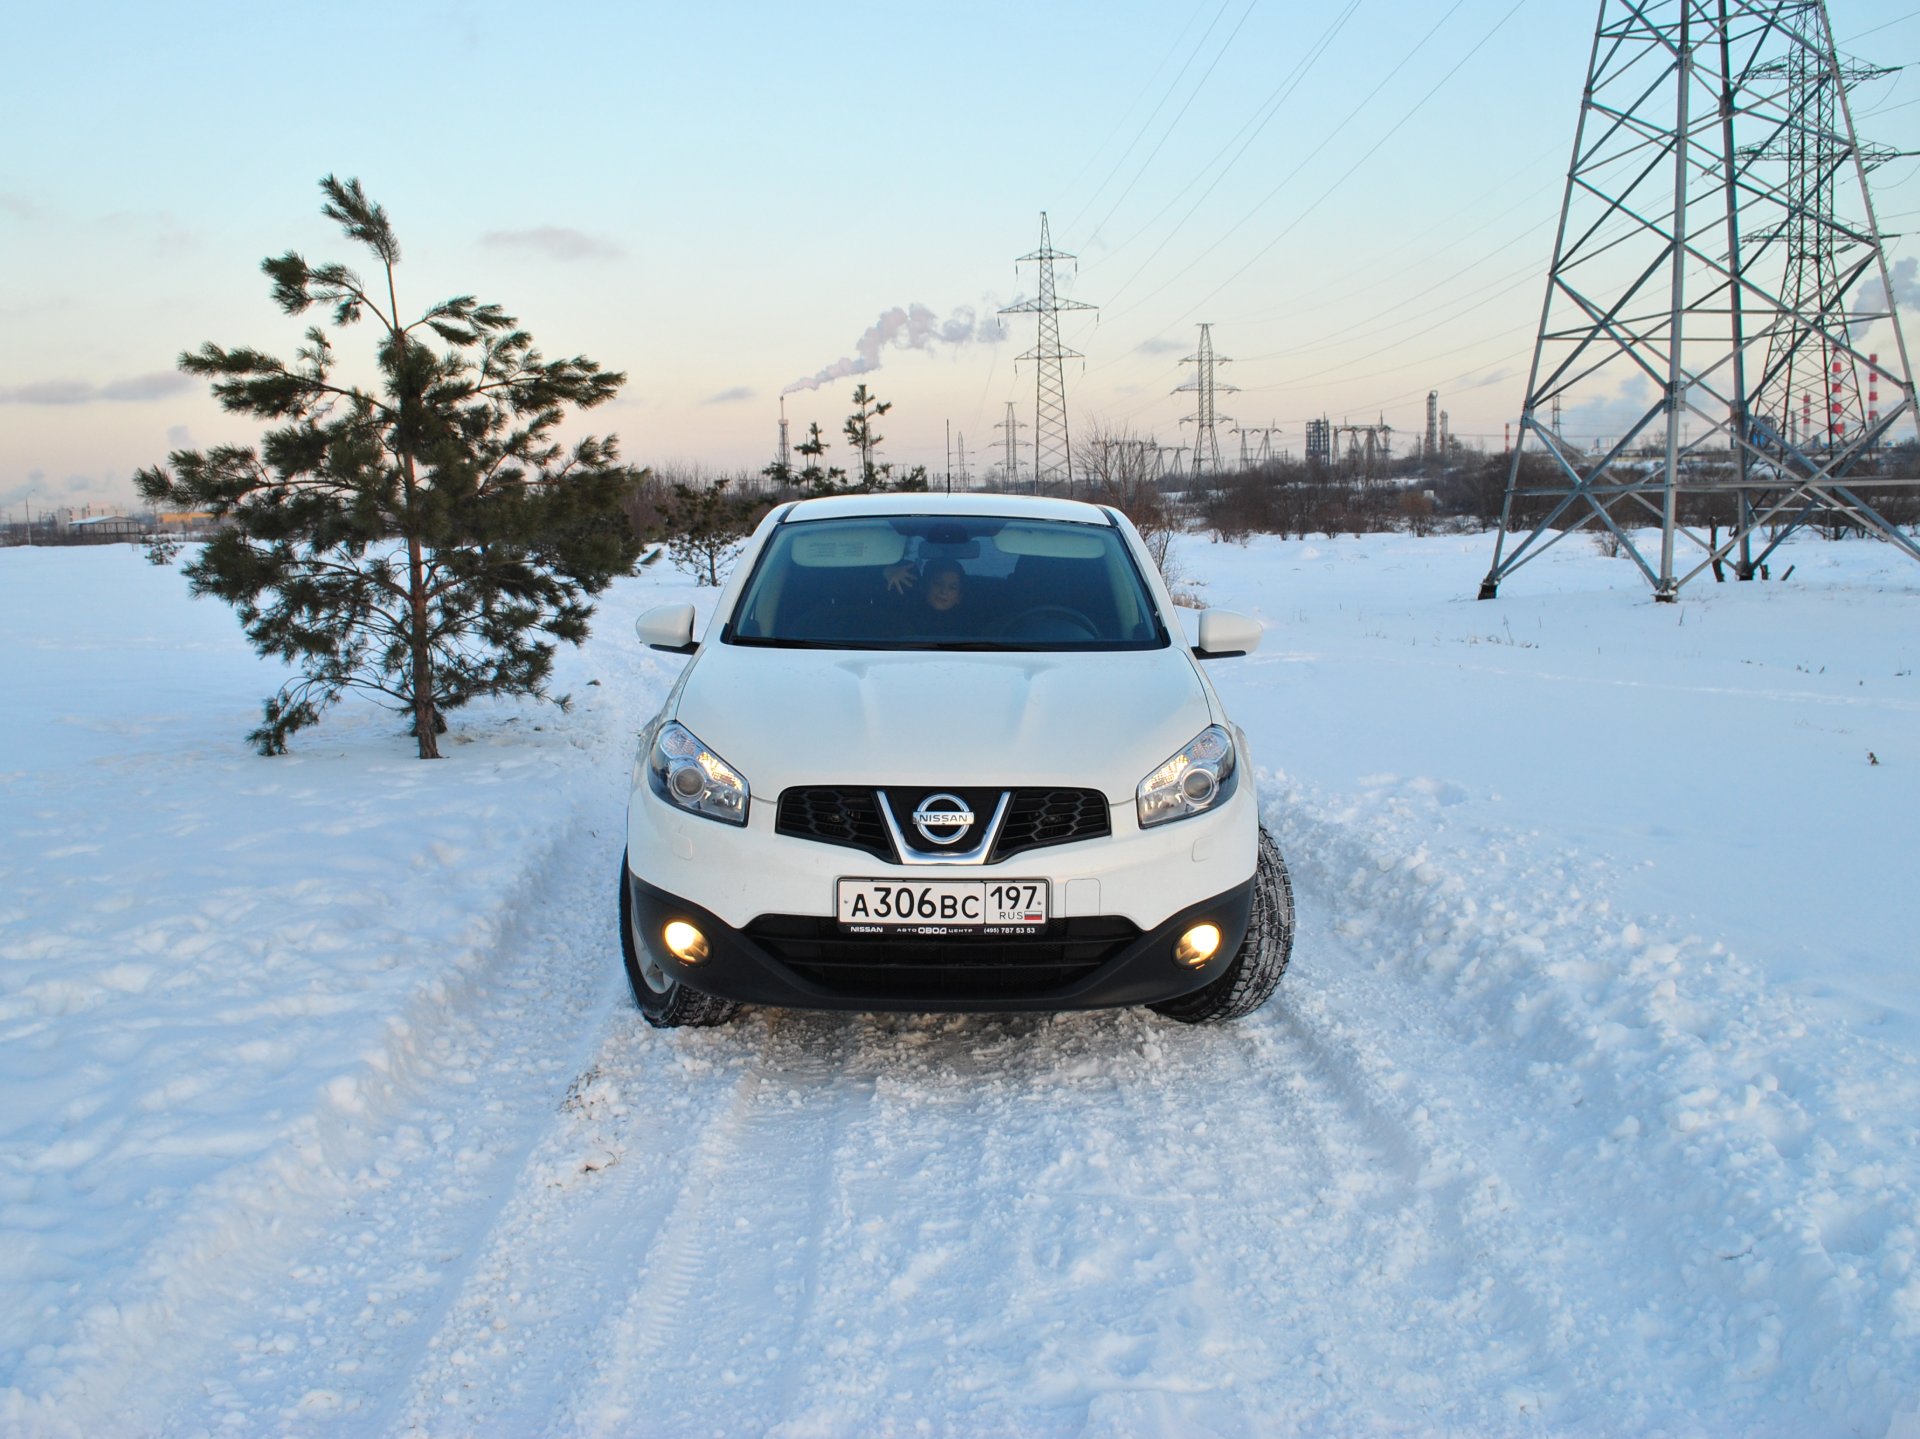 Дром ниссан кашкай хакасия. Ниссан Кашкай зима. Ниссан Кашкай белый. Nissan Qashqai 2014 по снегу. Ниссан Кашкай зима машинка.